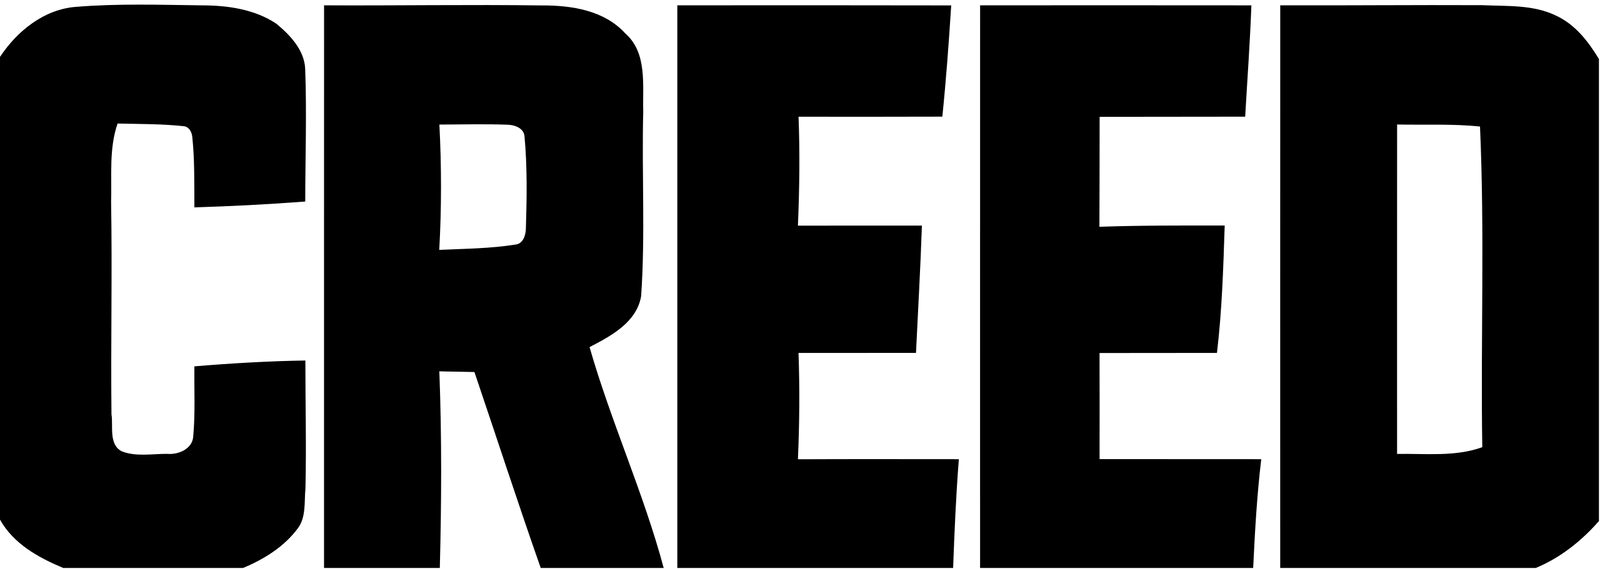 Creed logo.